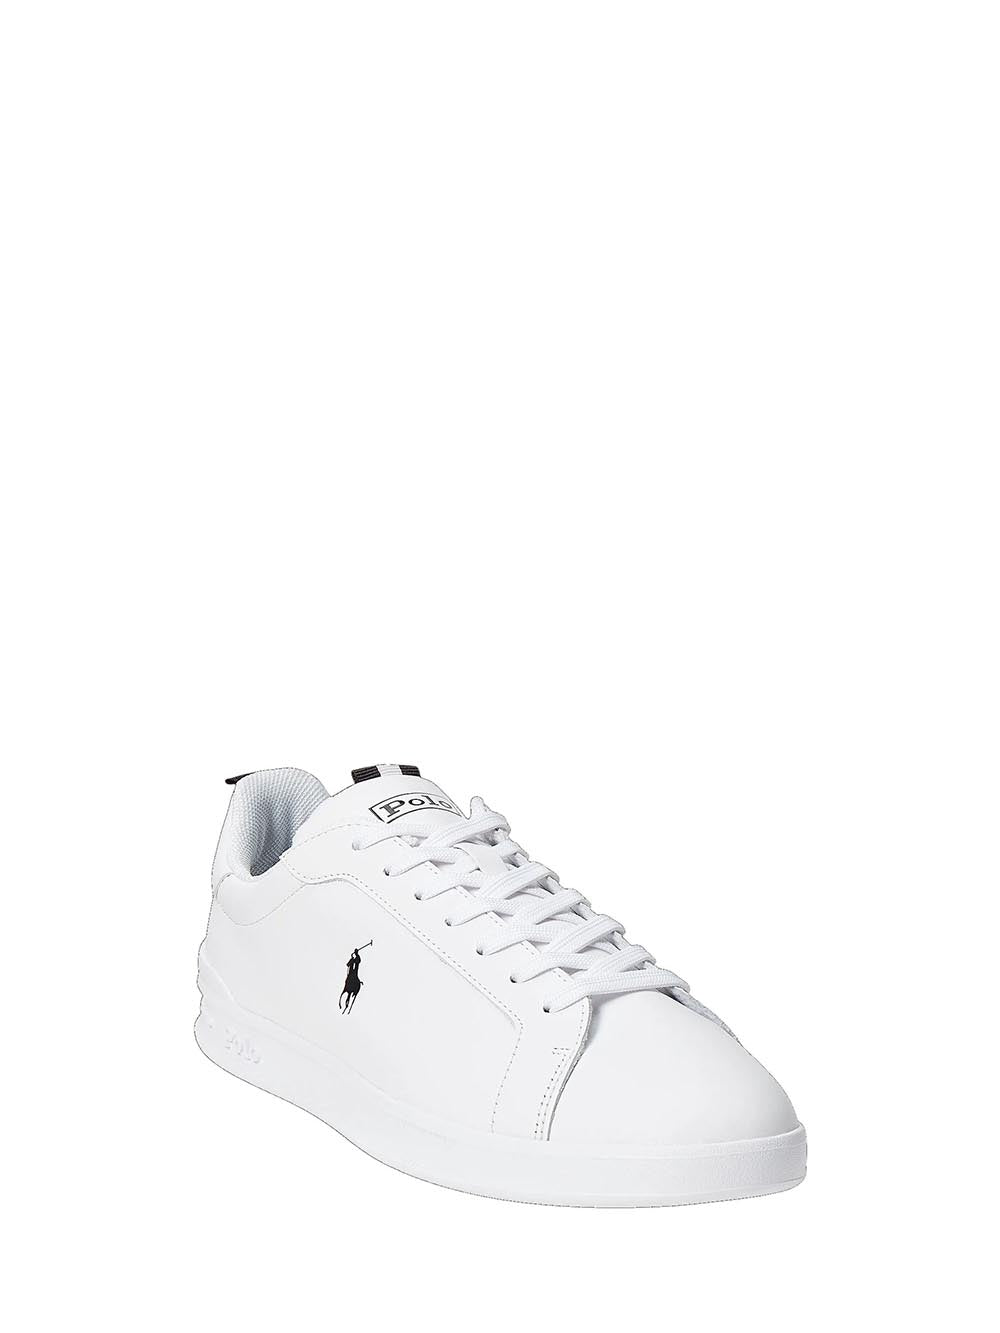 Polo Ralph Lauren Sneakers Uomo 809860883 Bianco